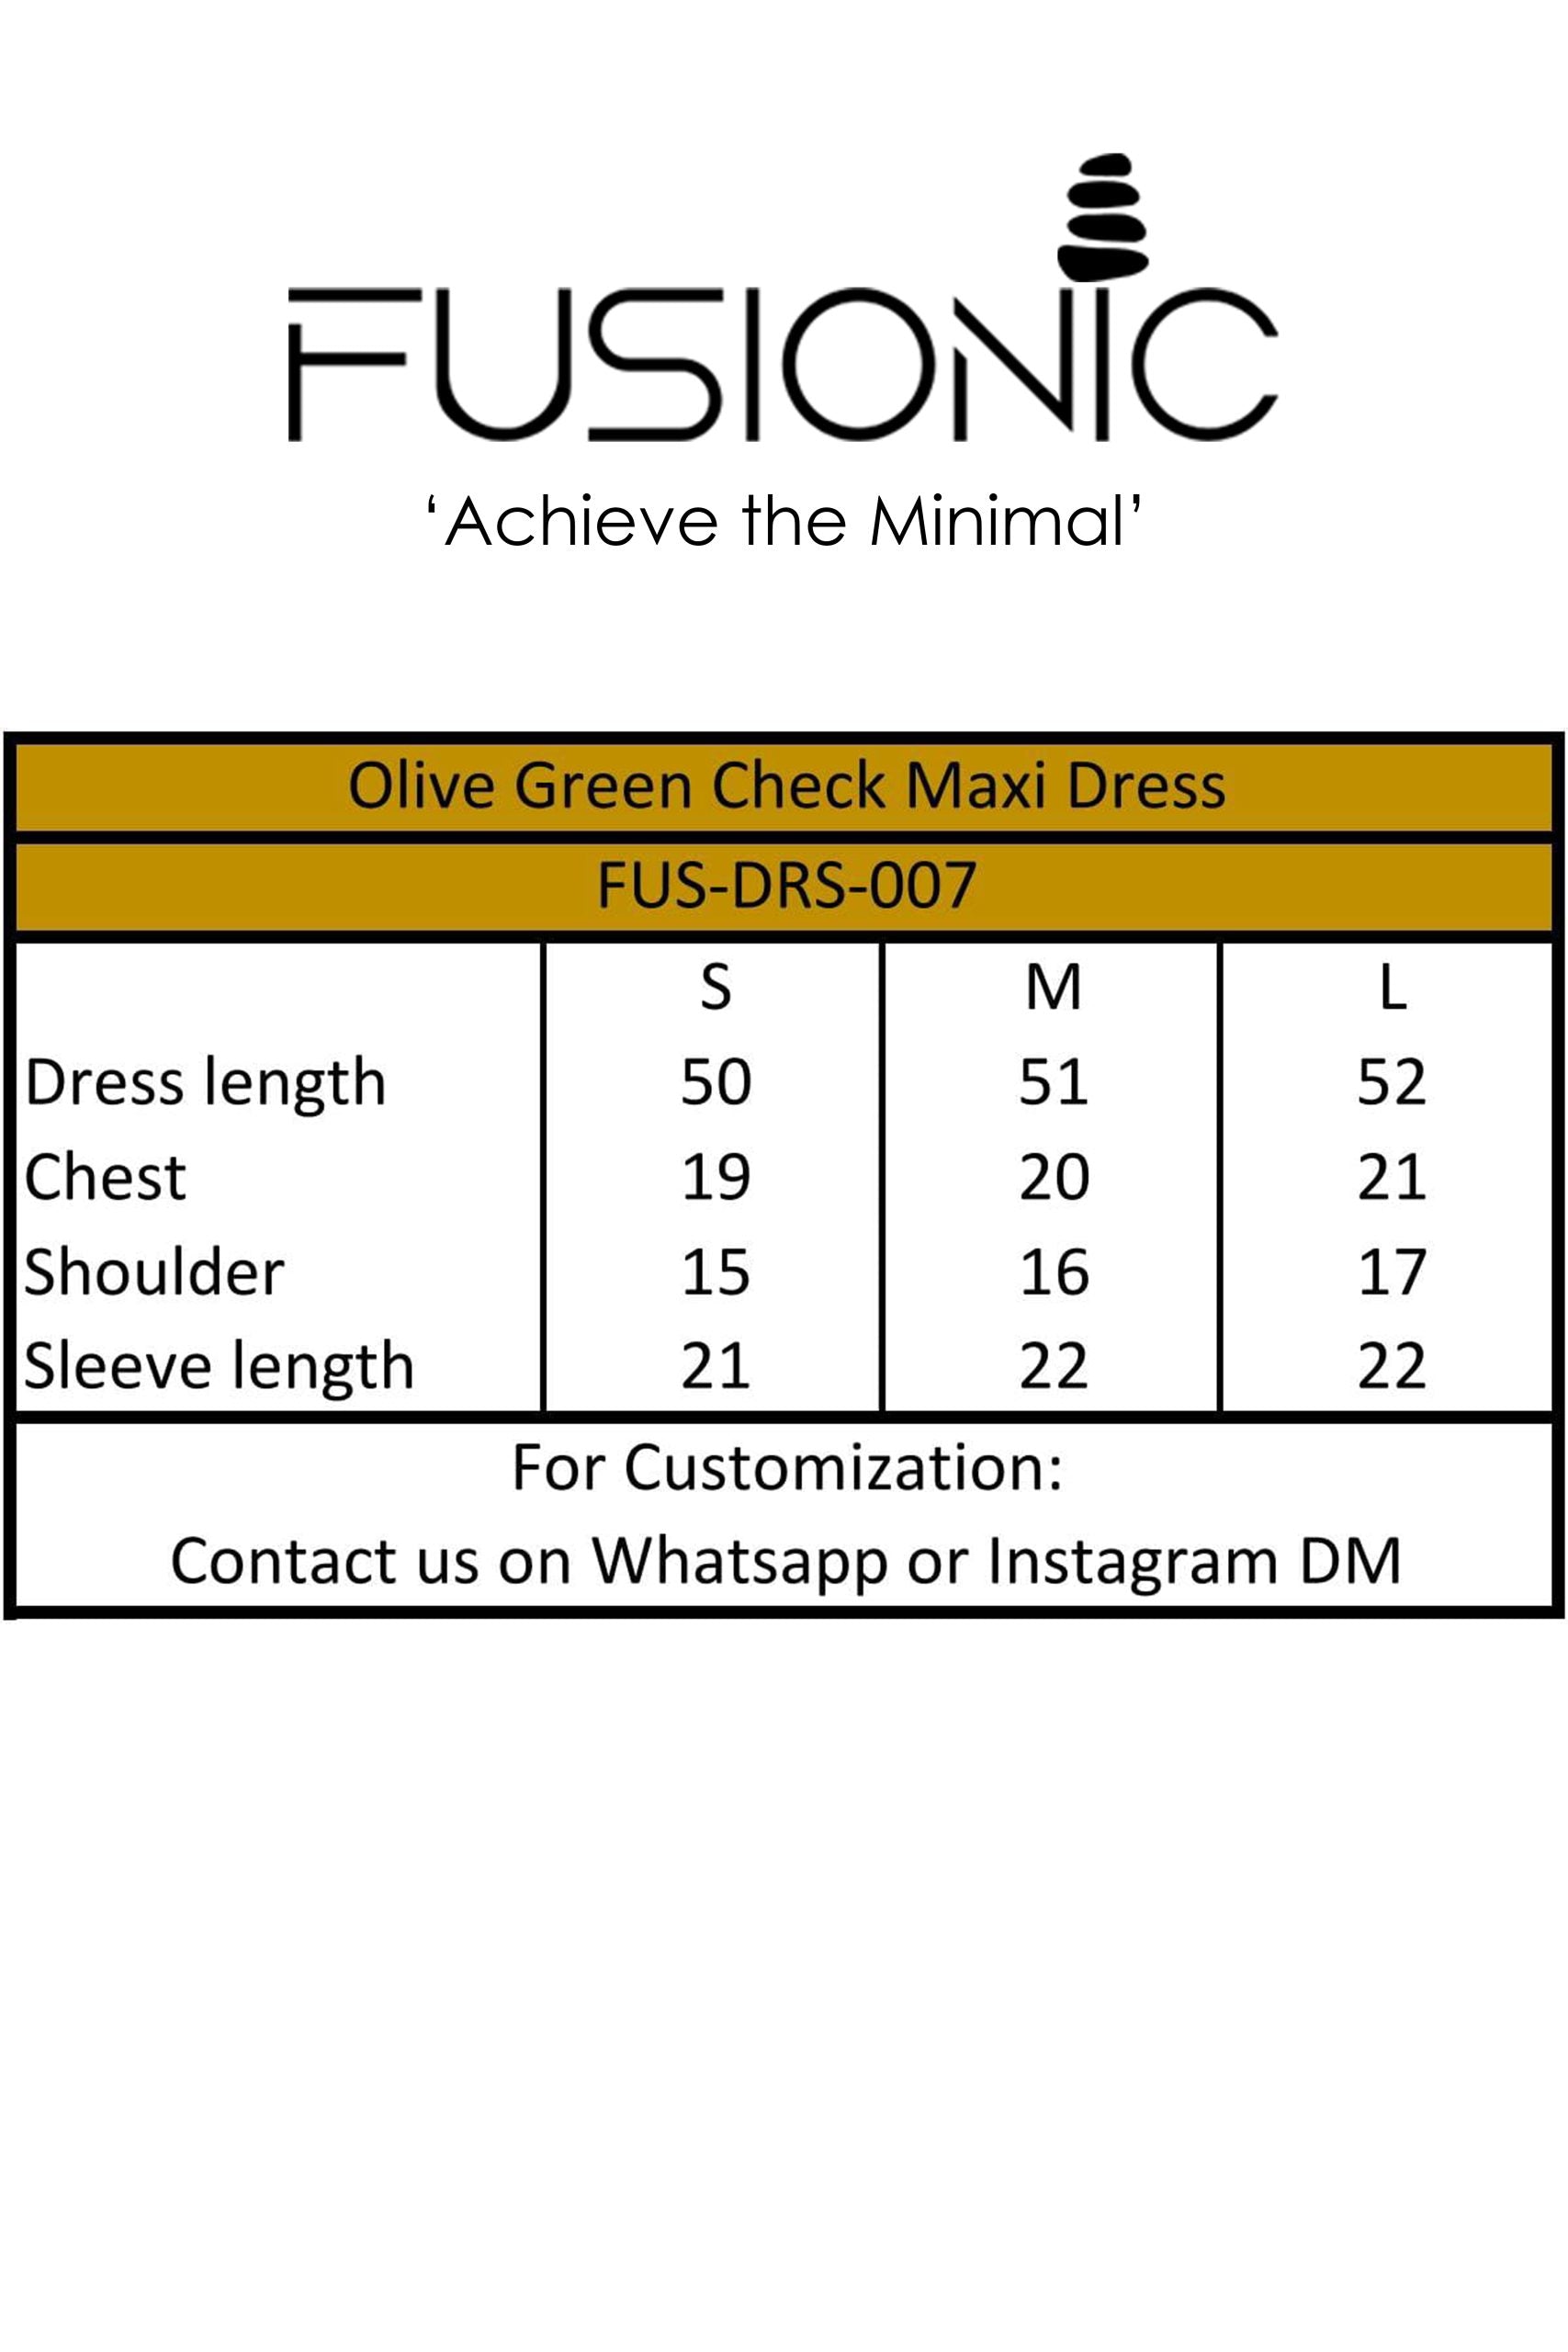 Olive Green Check Maxi Dress